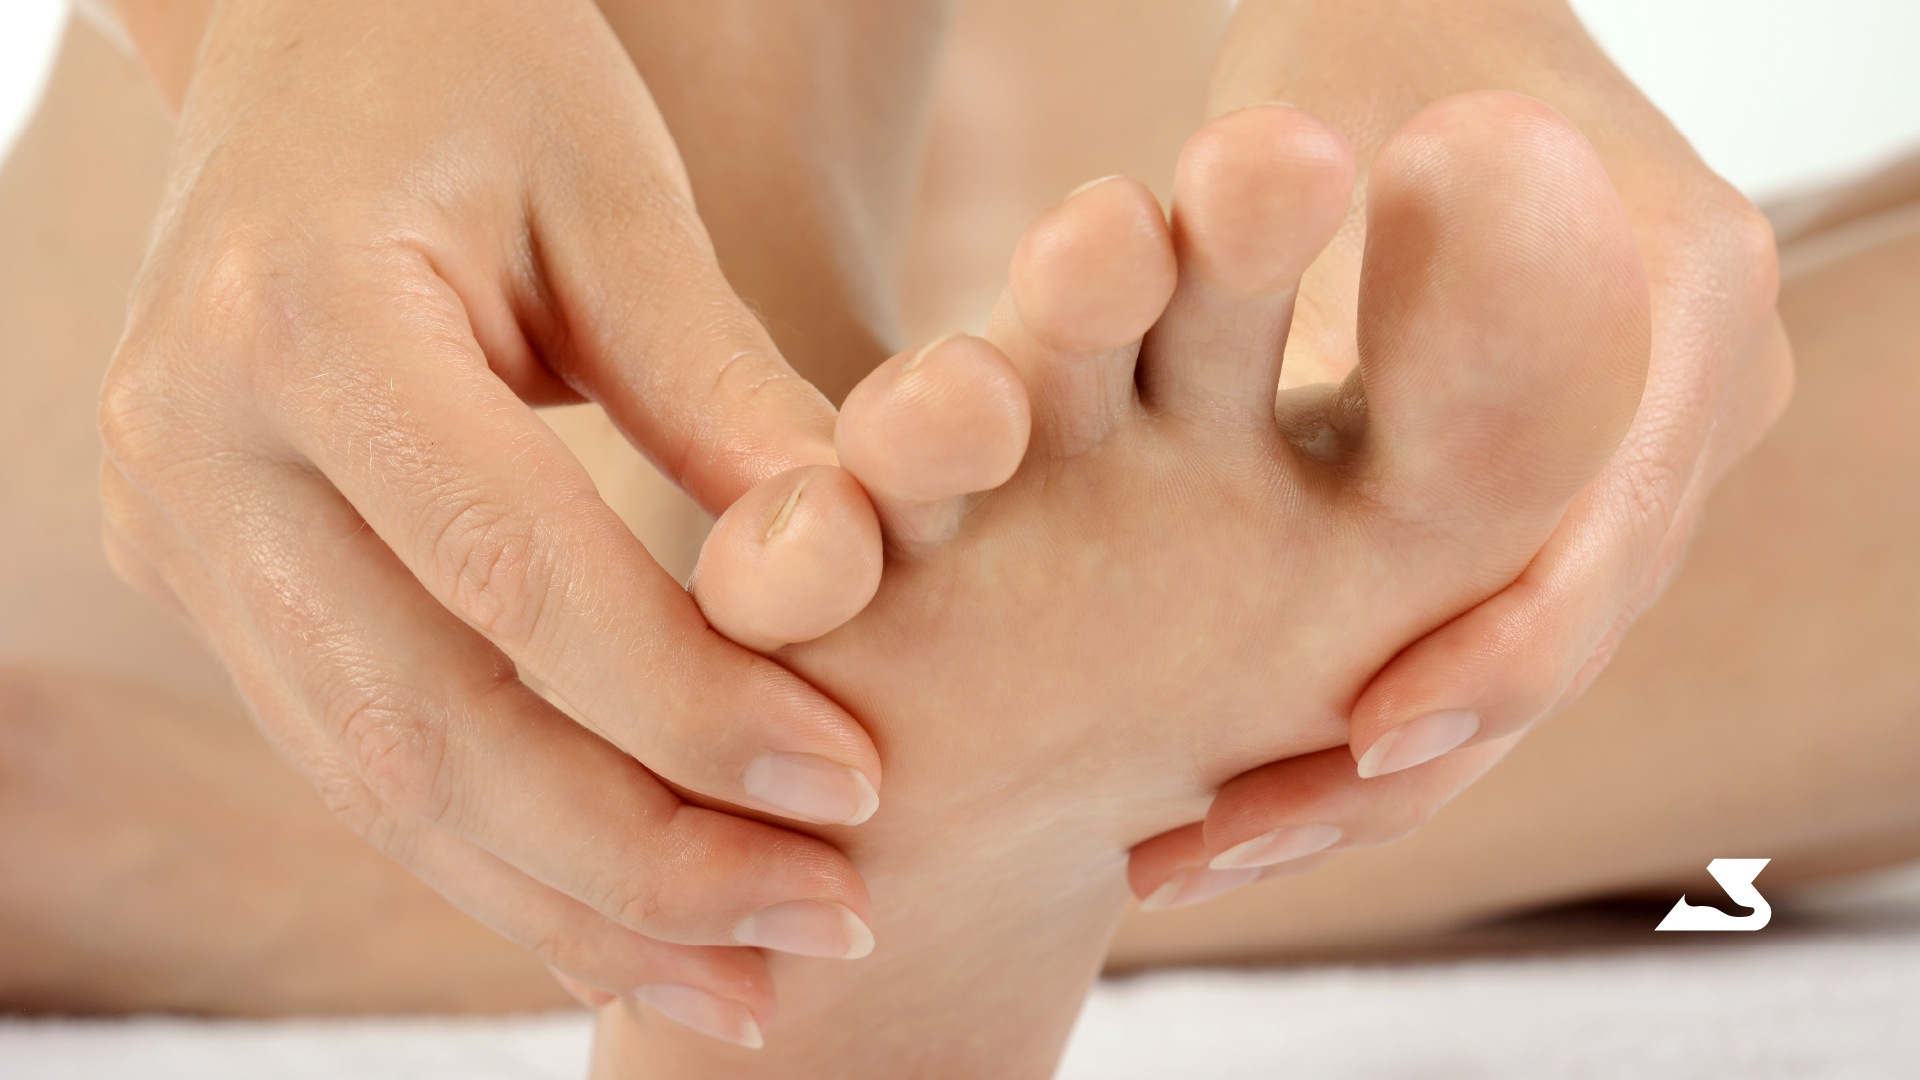 Toenail Bracing – the newest no surgery solution for ingrown toenails.